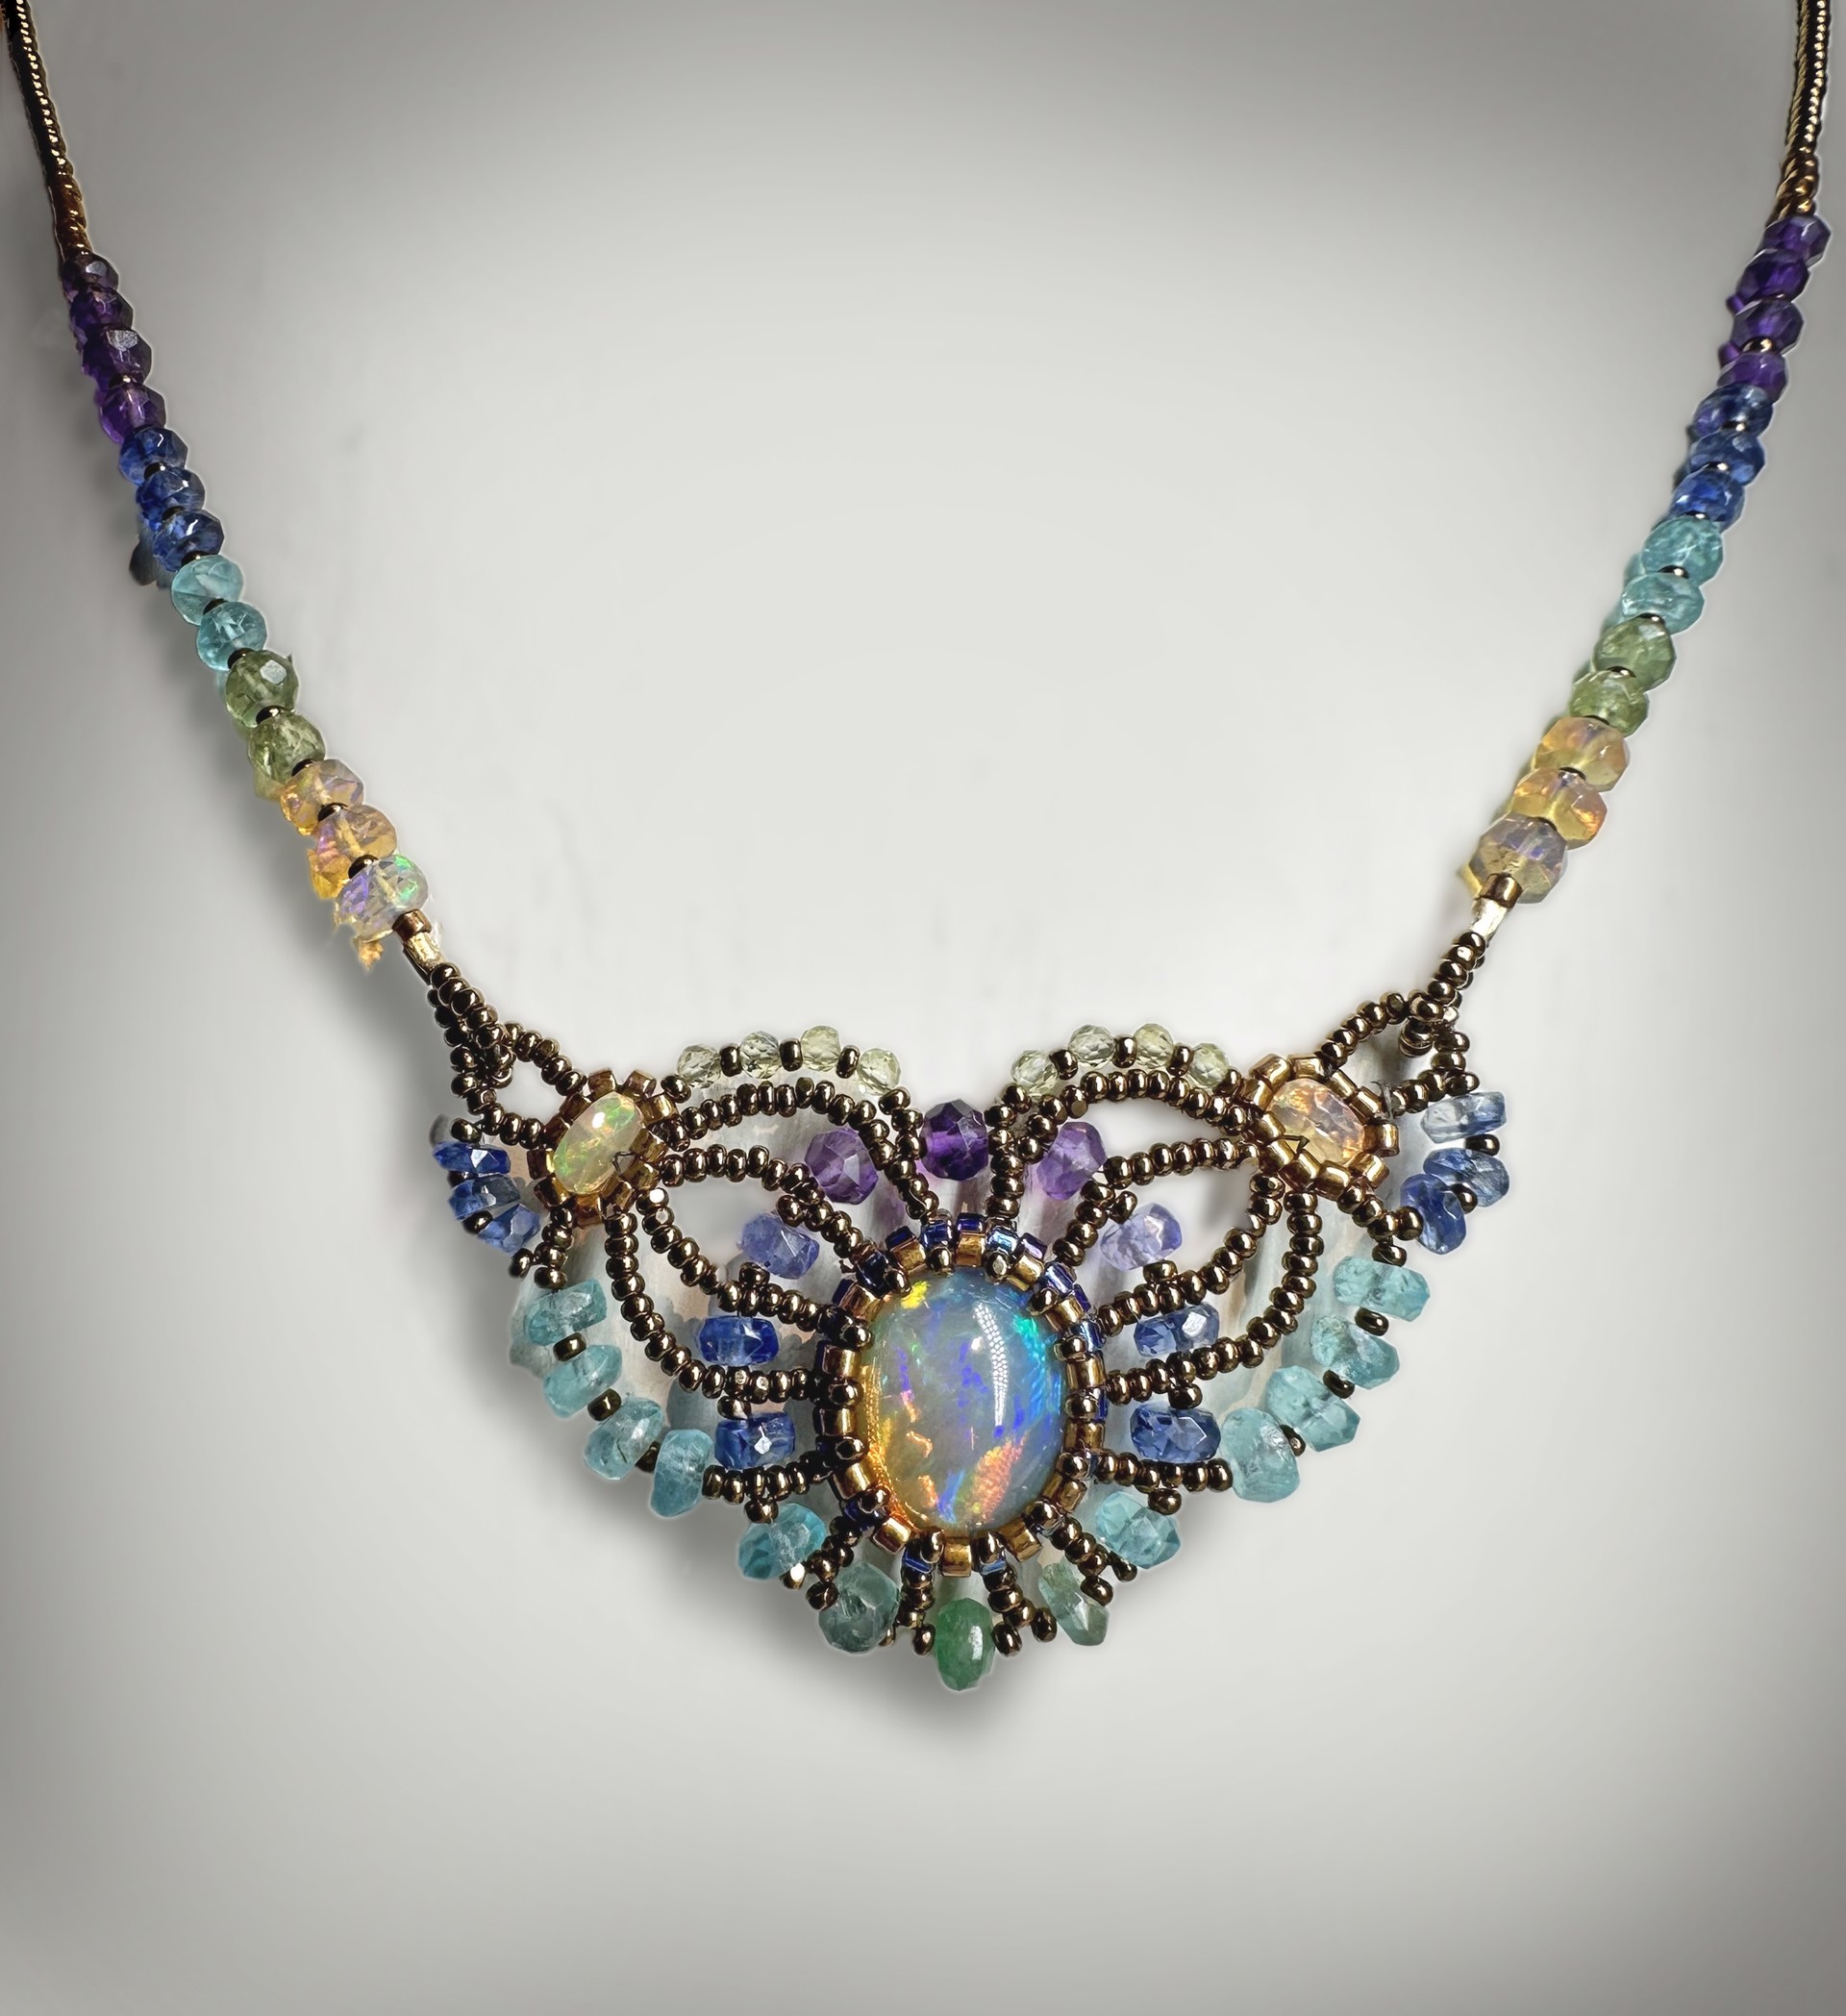 Ethiopian Opal Centerpiece Necklace with Gemstone Beads by Nina Vidal